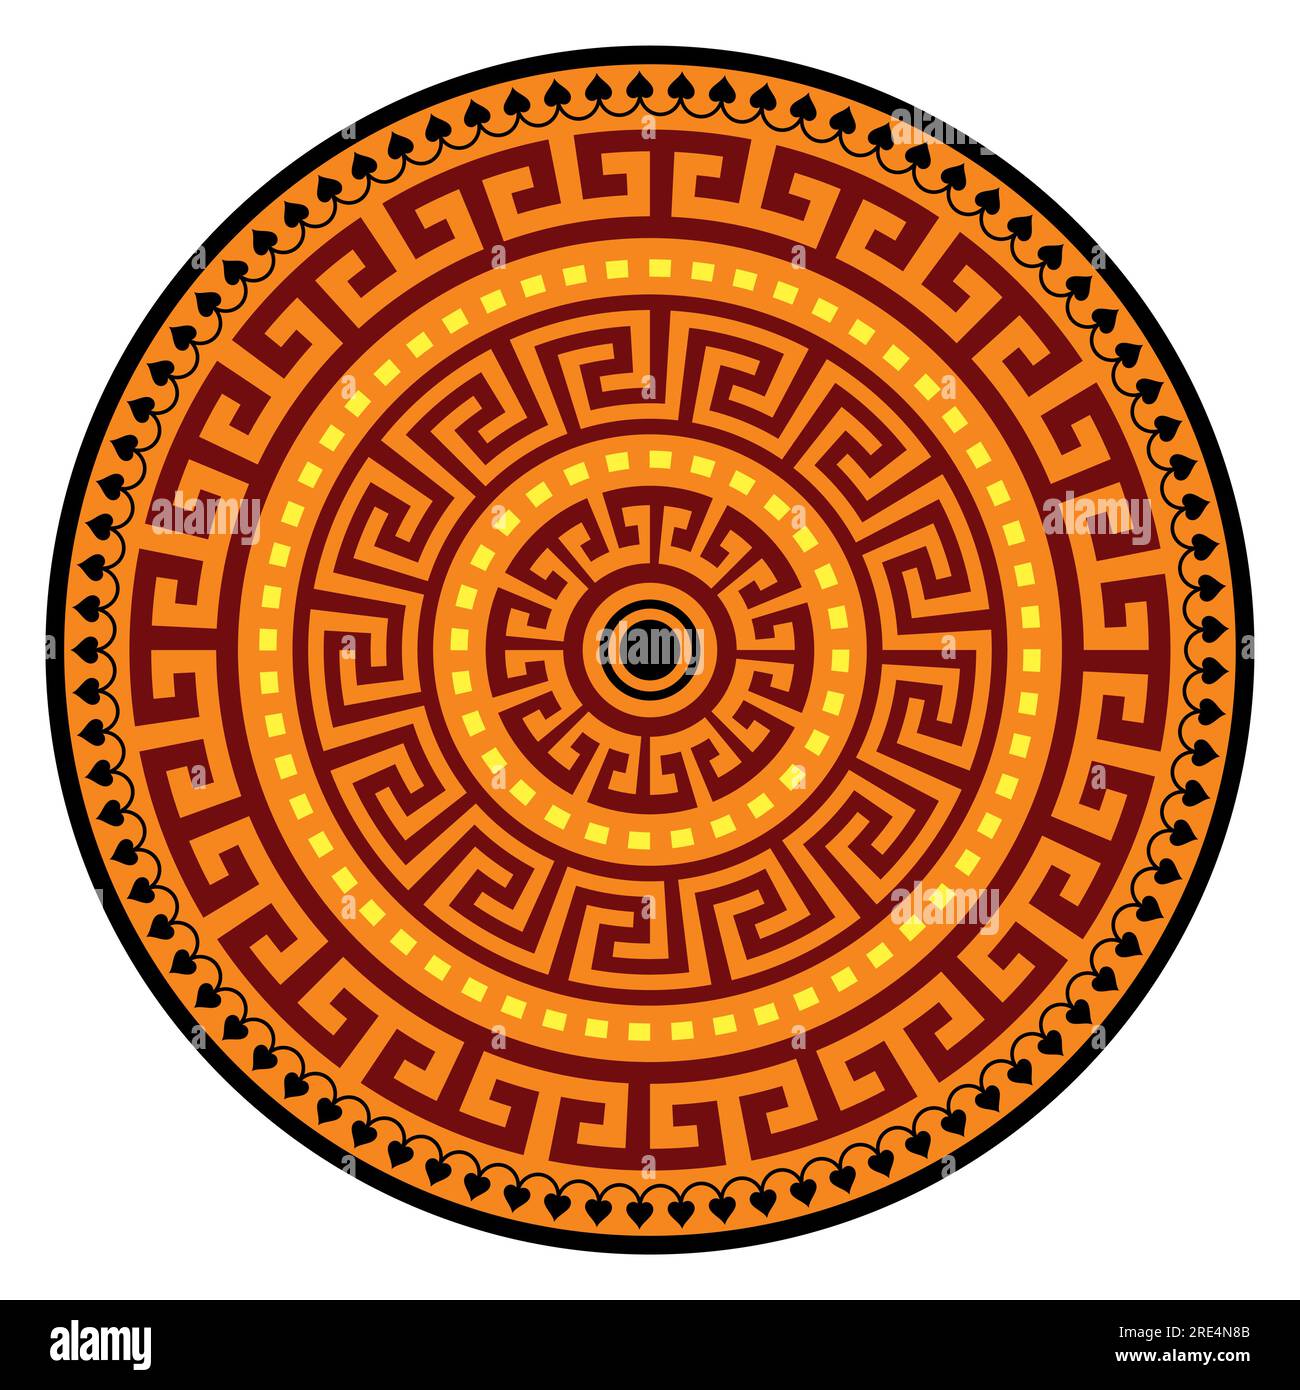 Greek vector ancient vase mandala design with key pattern, geometric boho pattern in brown and orange background Stock Vector